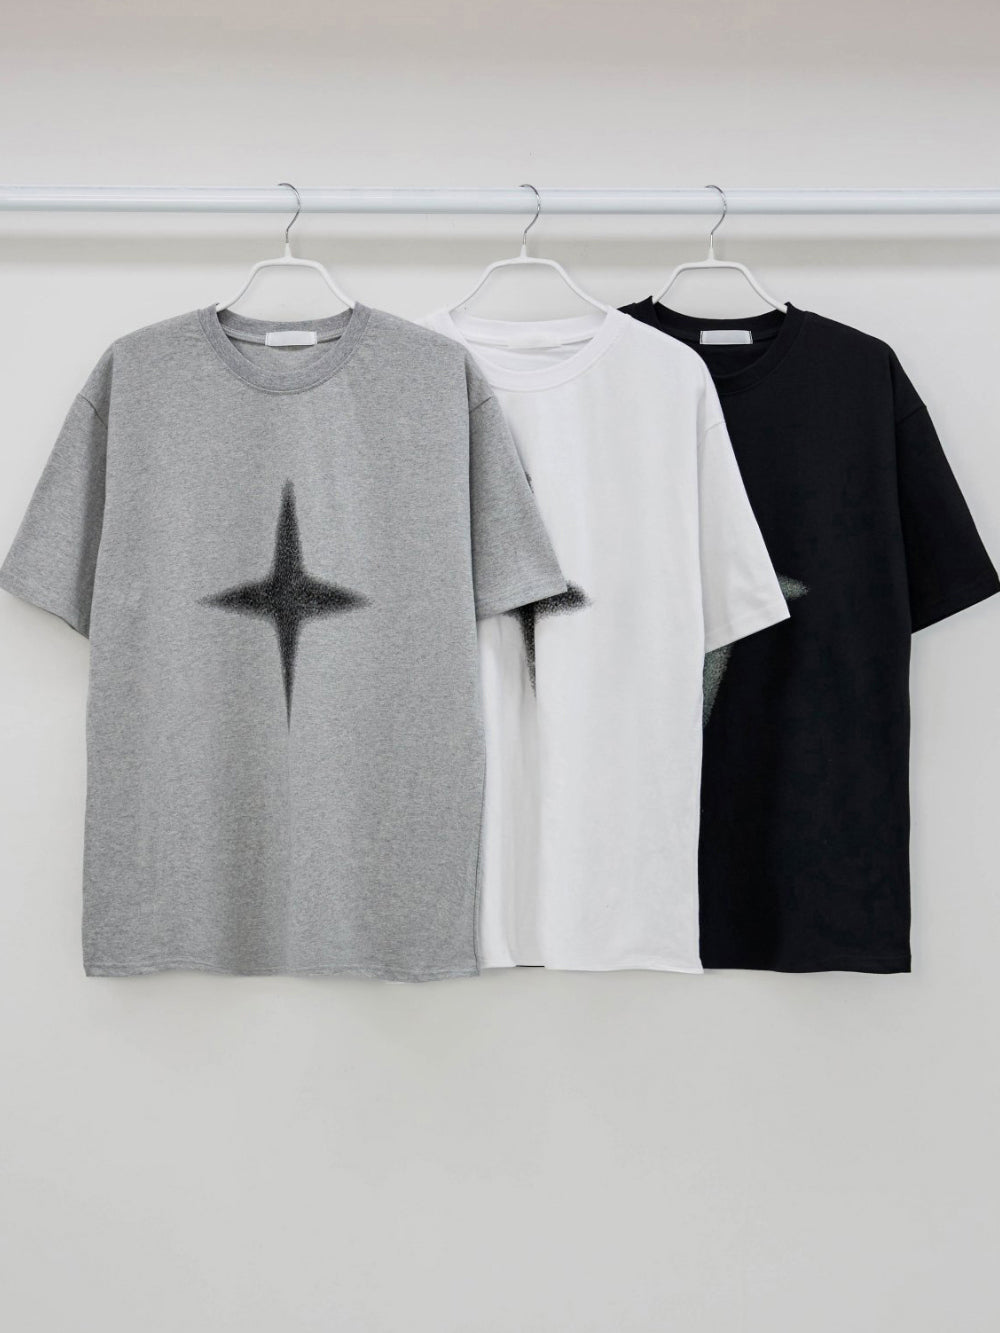 LMN DeRover Star Printed Short-Sleeved T-Shirt (3 colors)